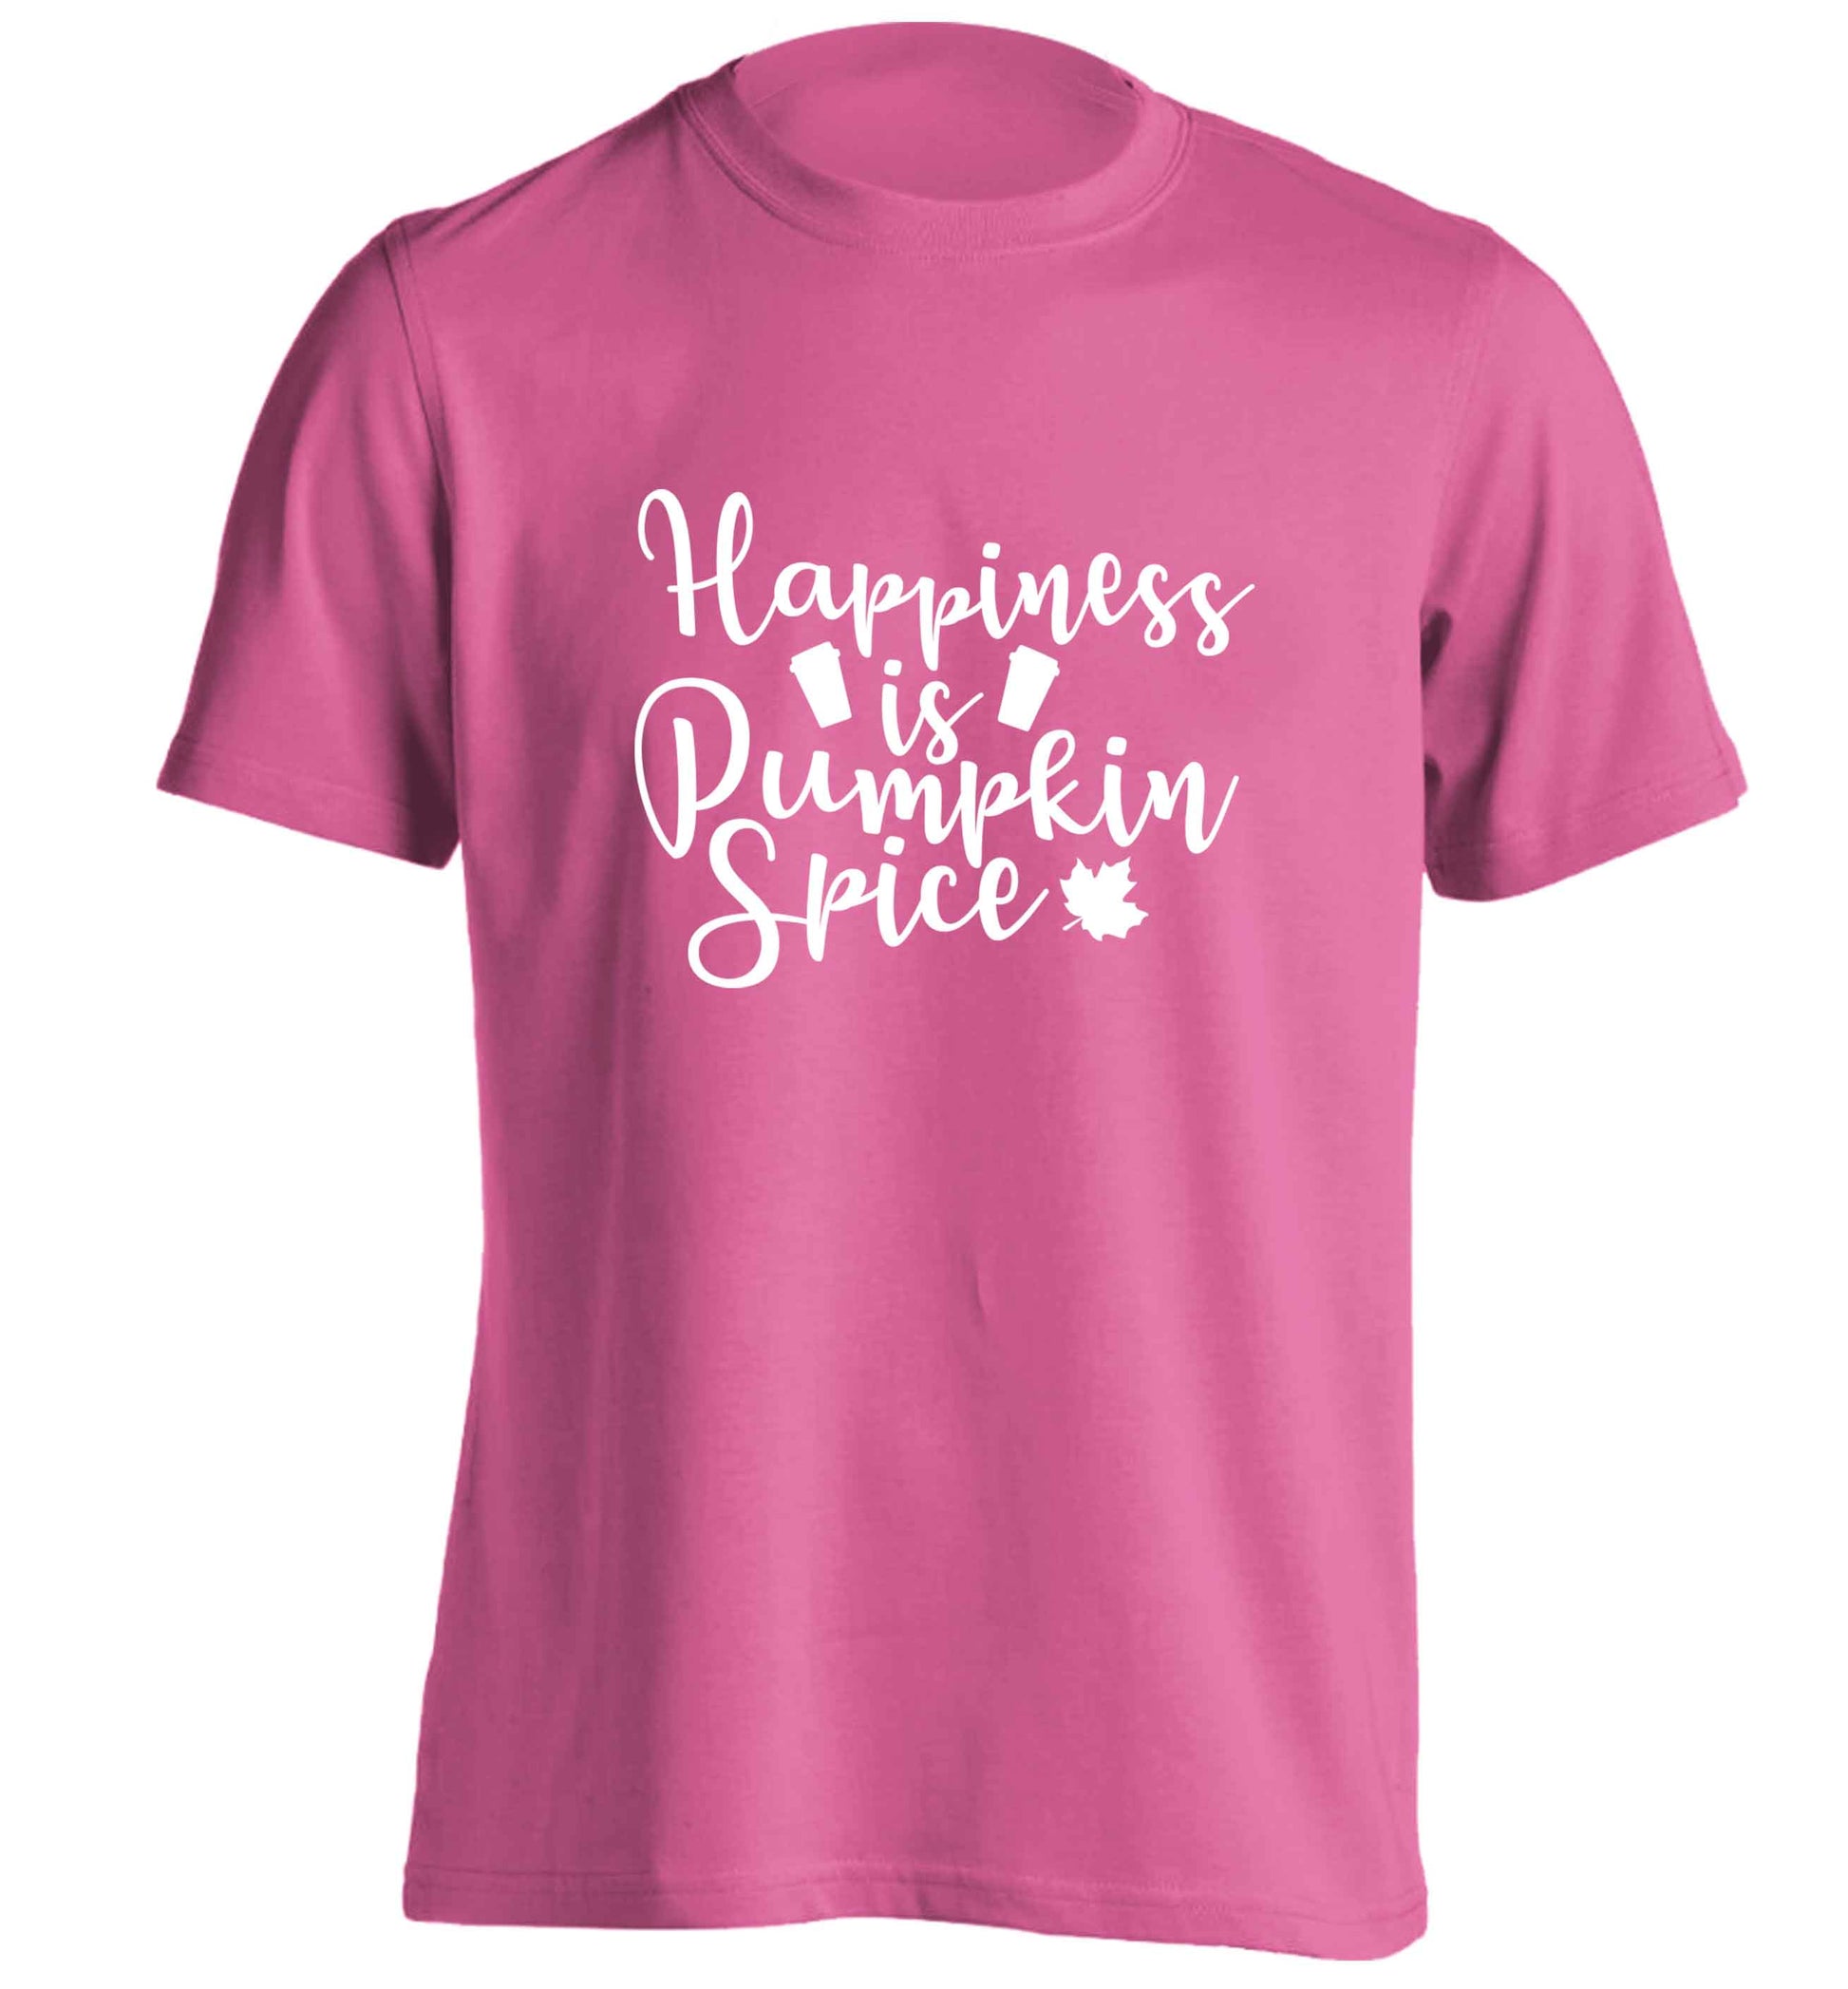 Happiness Pumpkin Spice adults unisex pink Tshirt 2XL